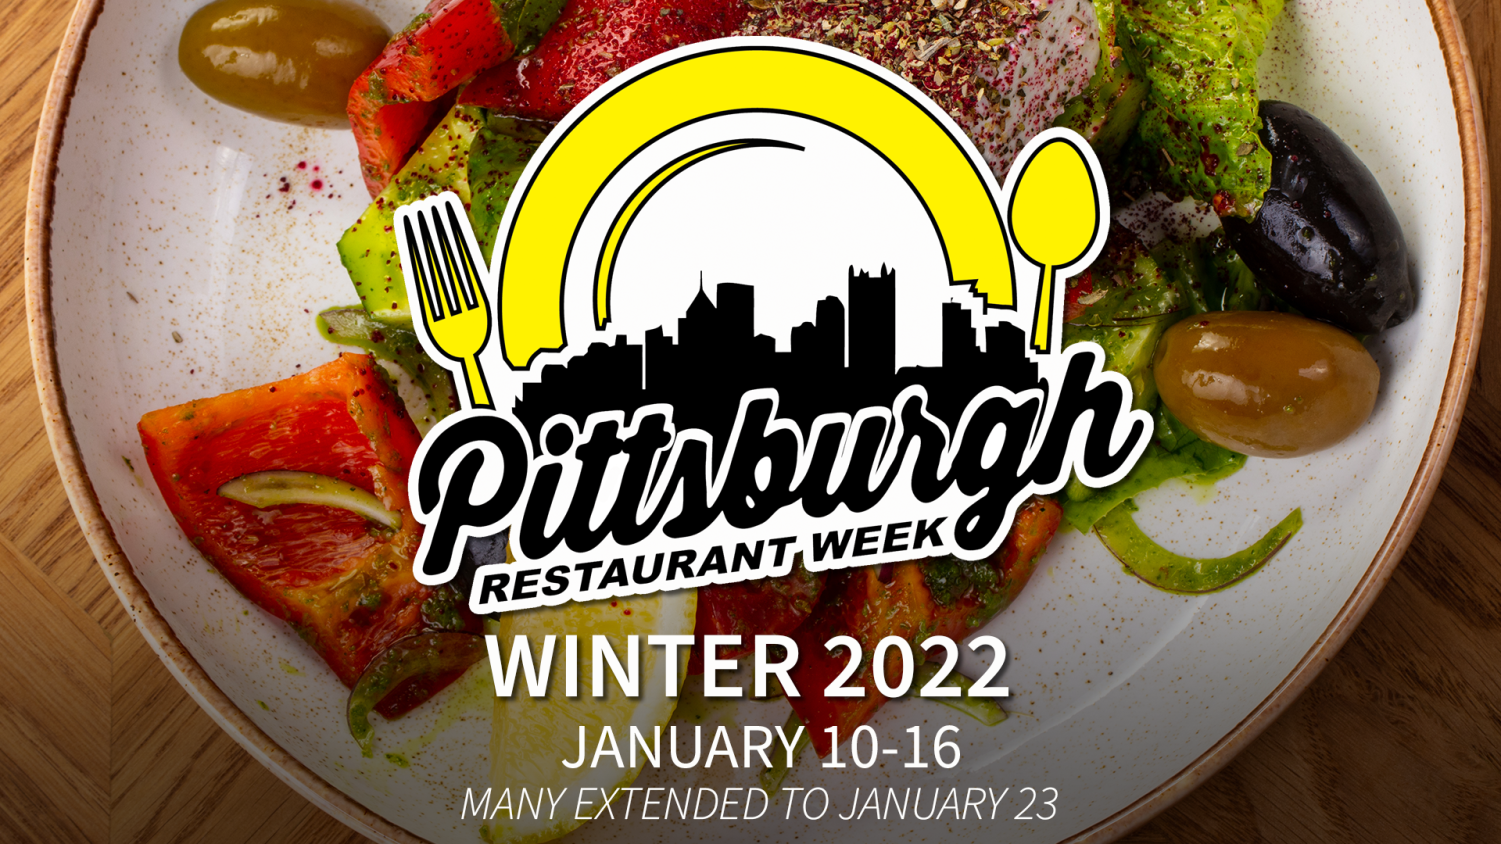 Pittsburgh Restaurant Week highlights local restaurants, celebrates new